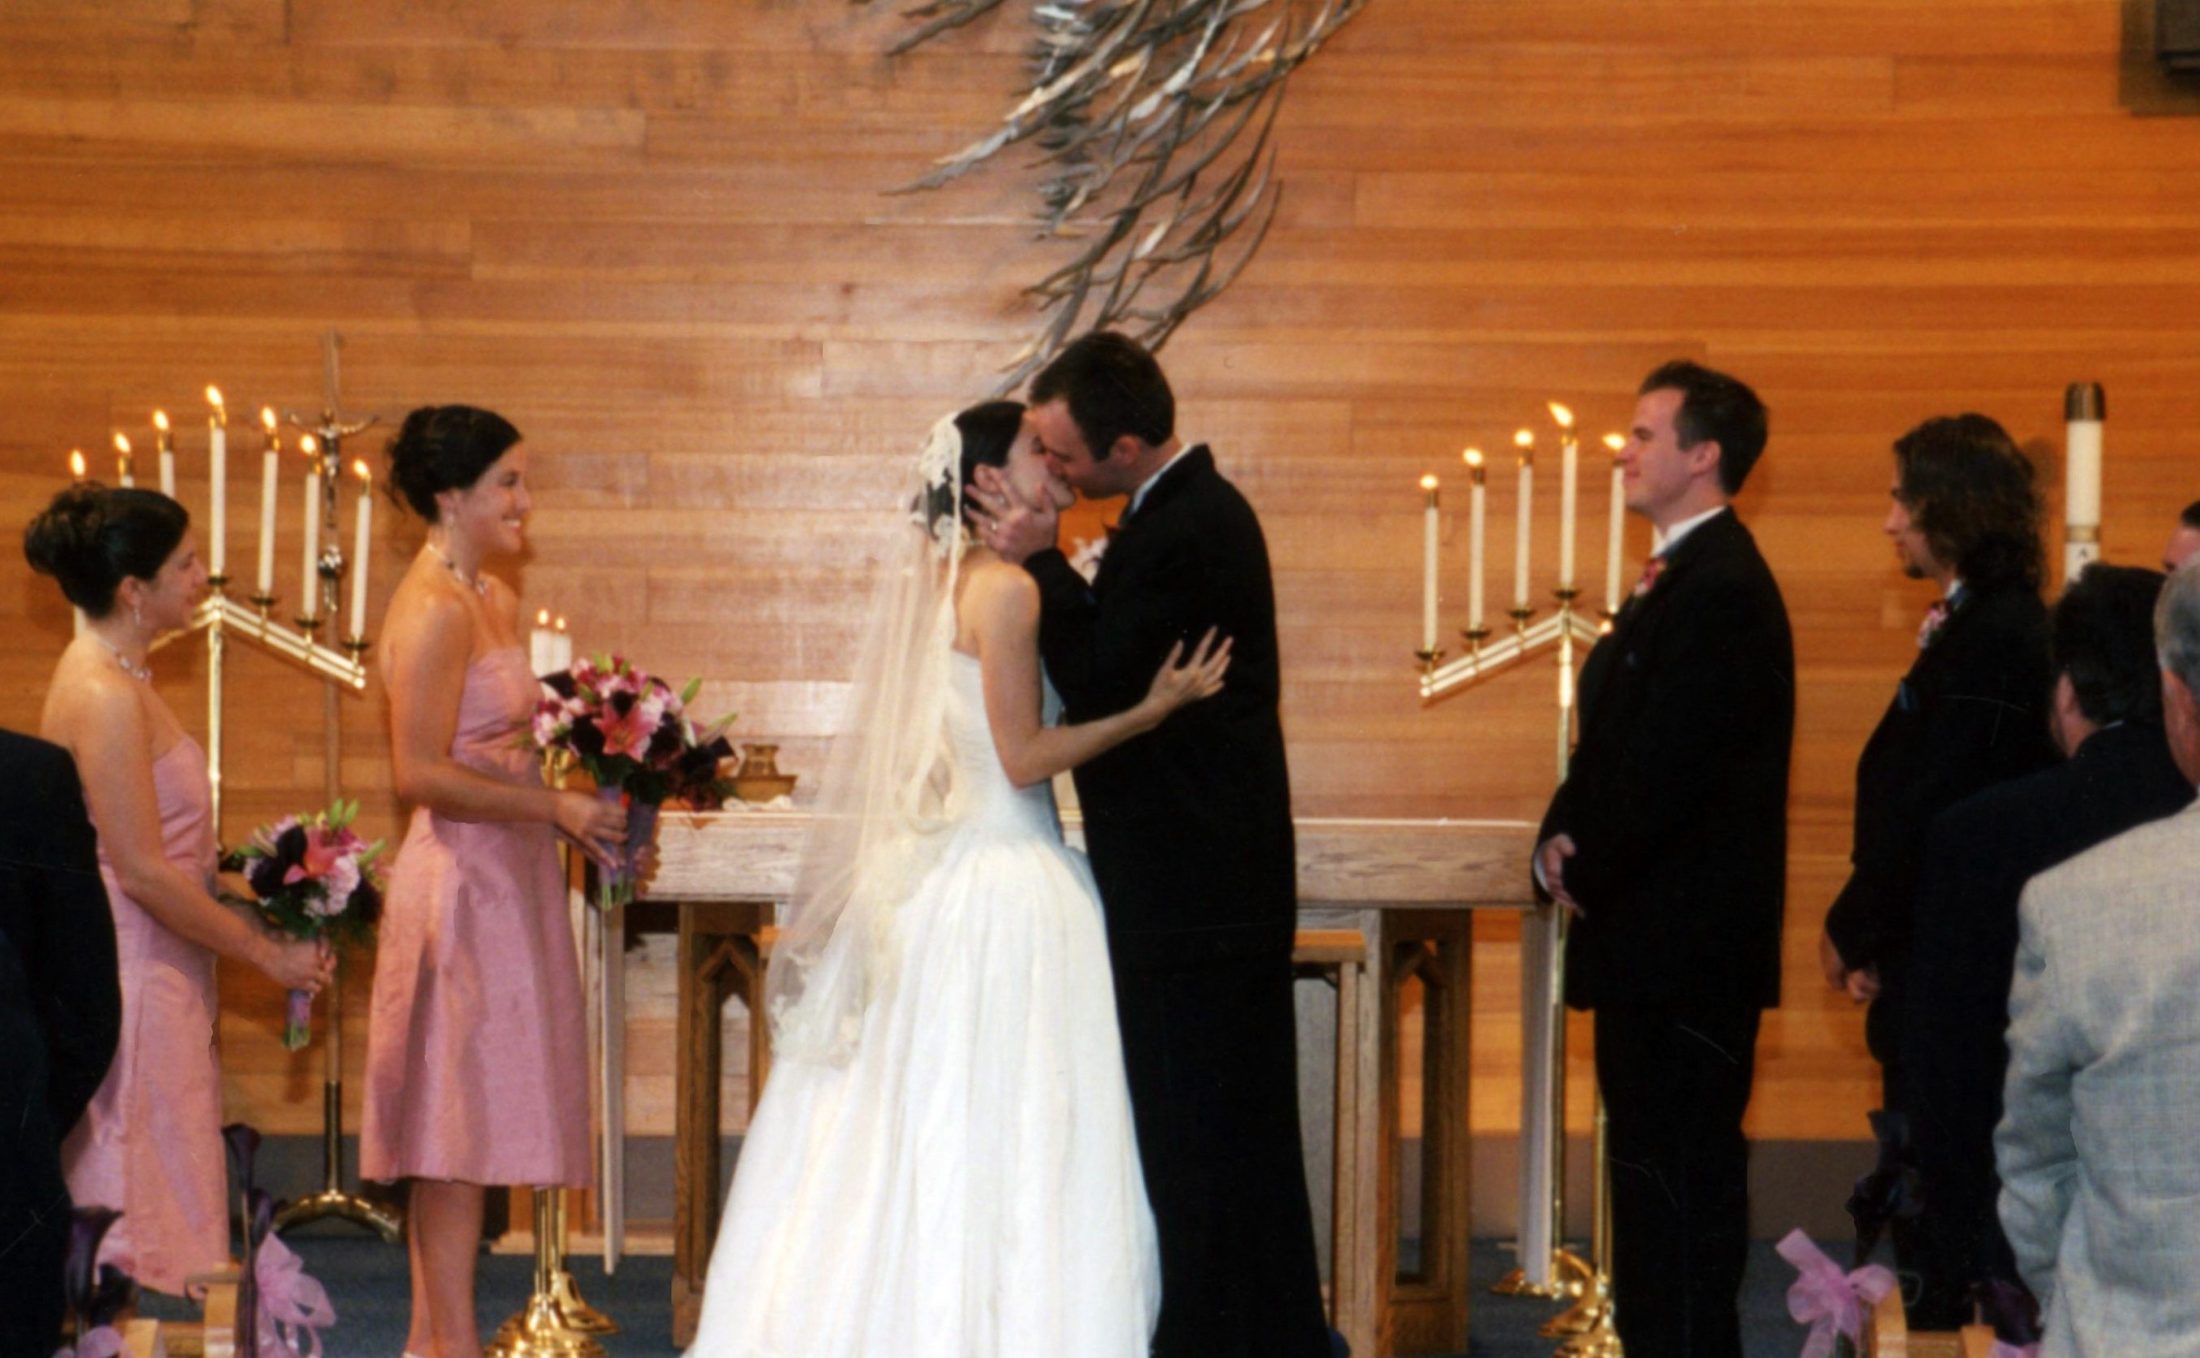 DC widow blog writer Marjorie Brimley kisses husband Shawn at their wedding